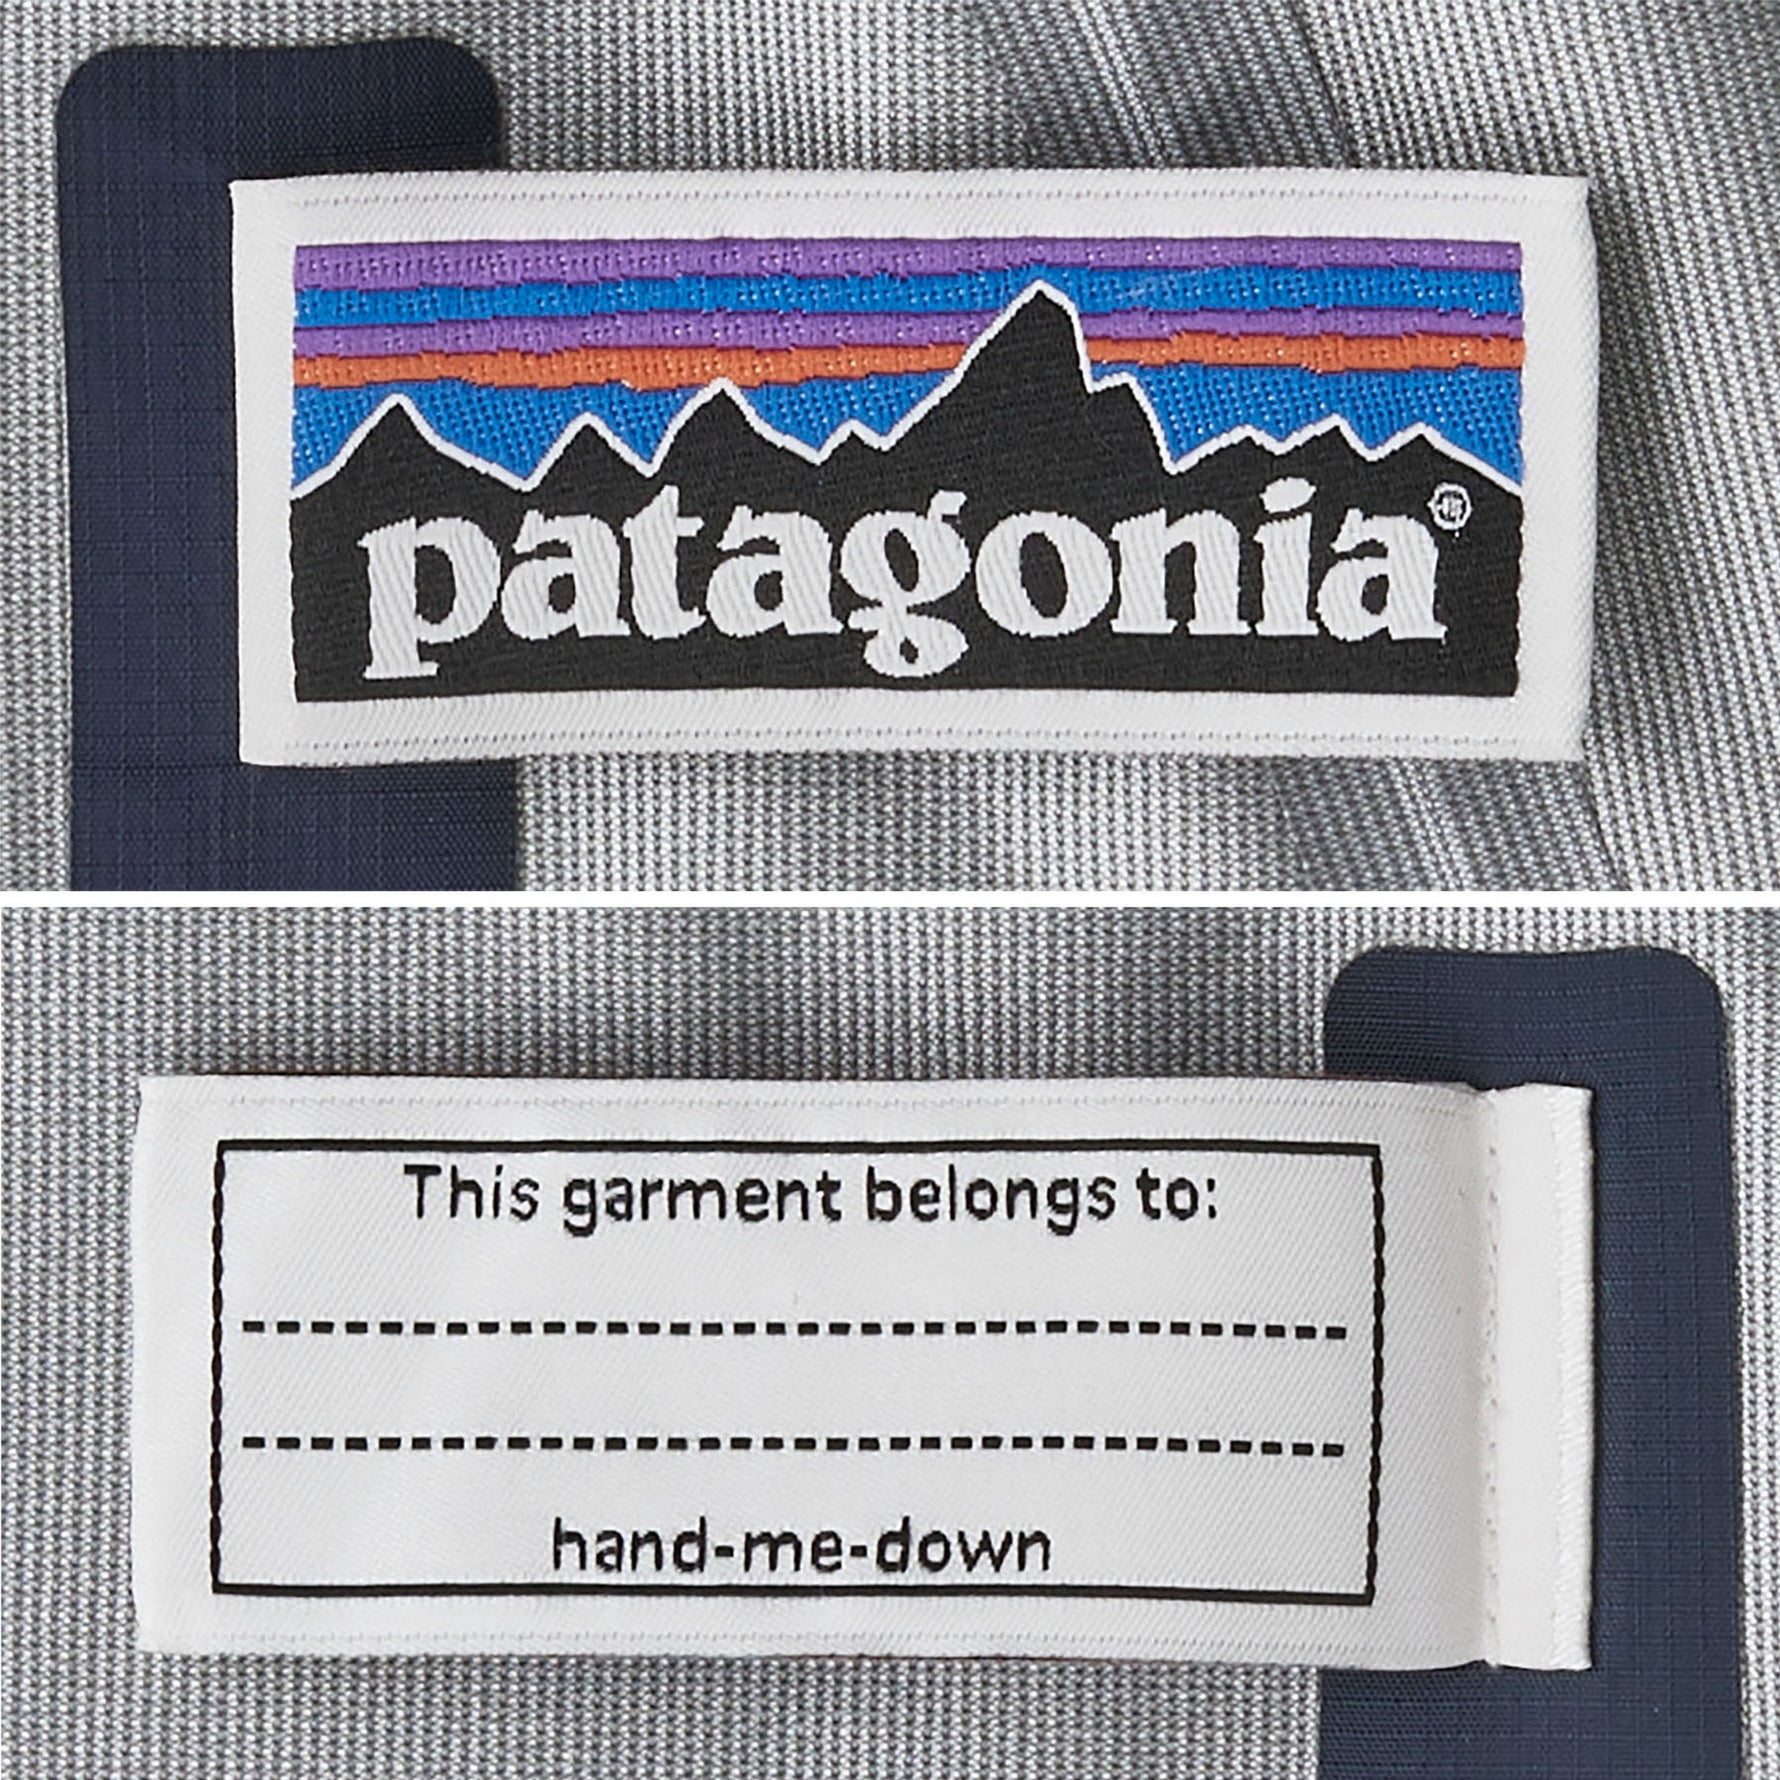 Patagonia Girl's Torrentshell 3L Jacket 